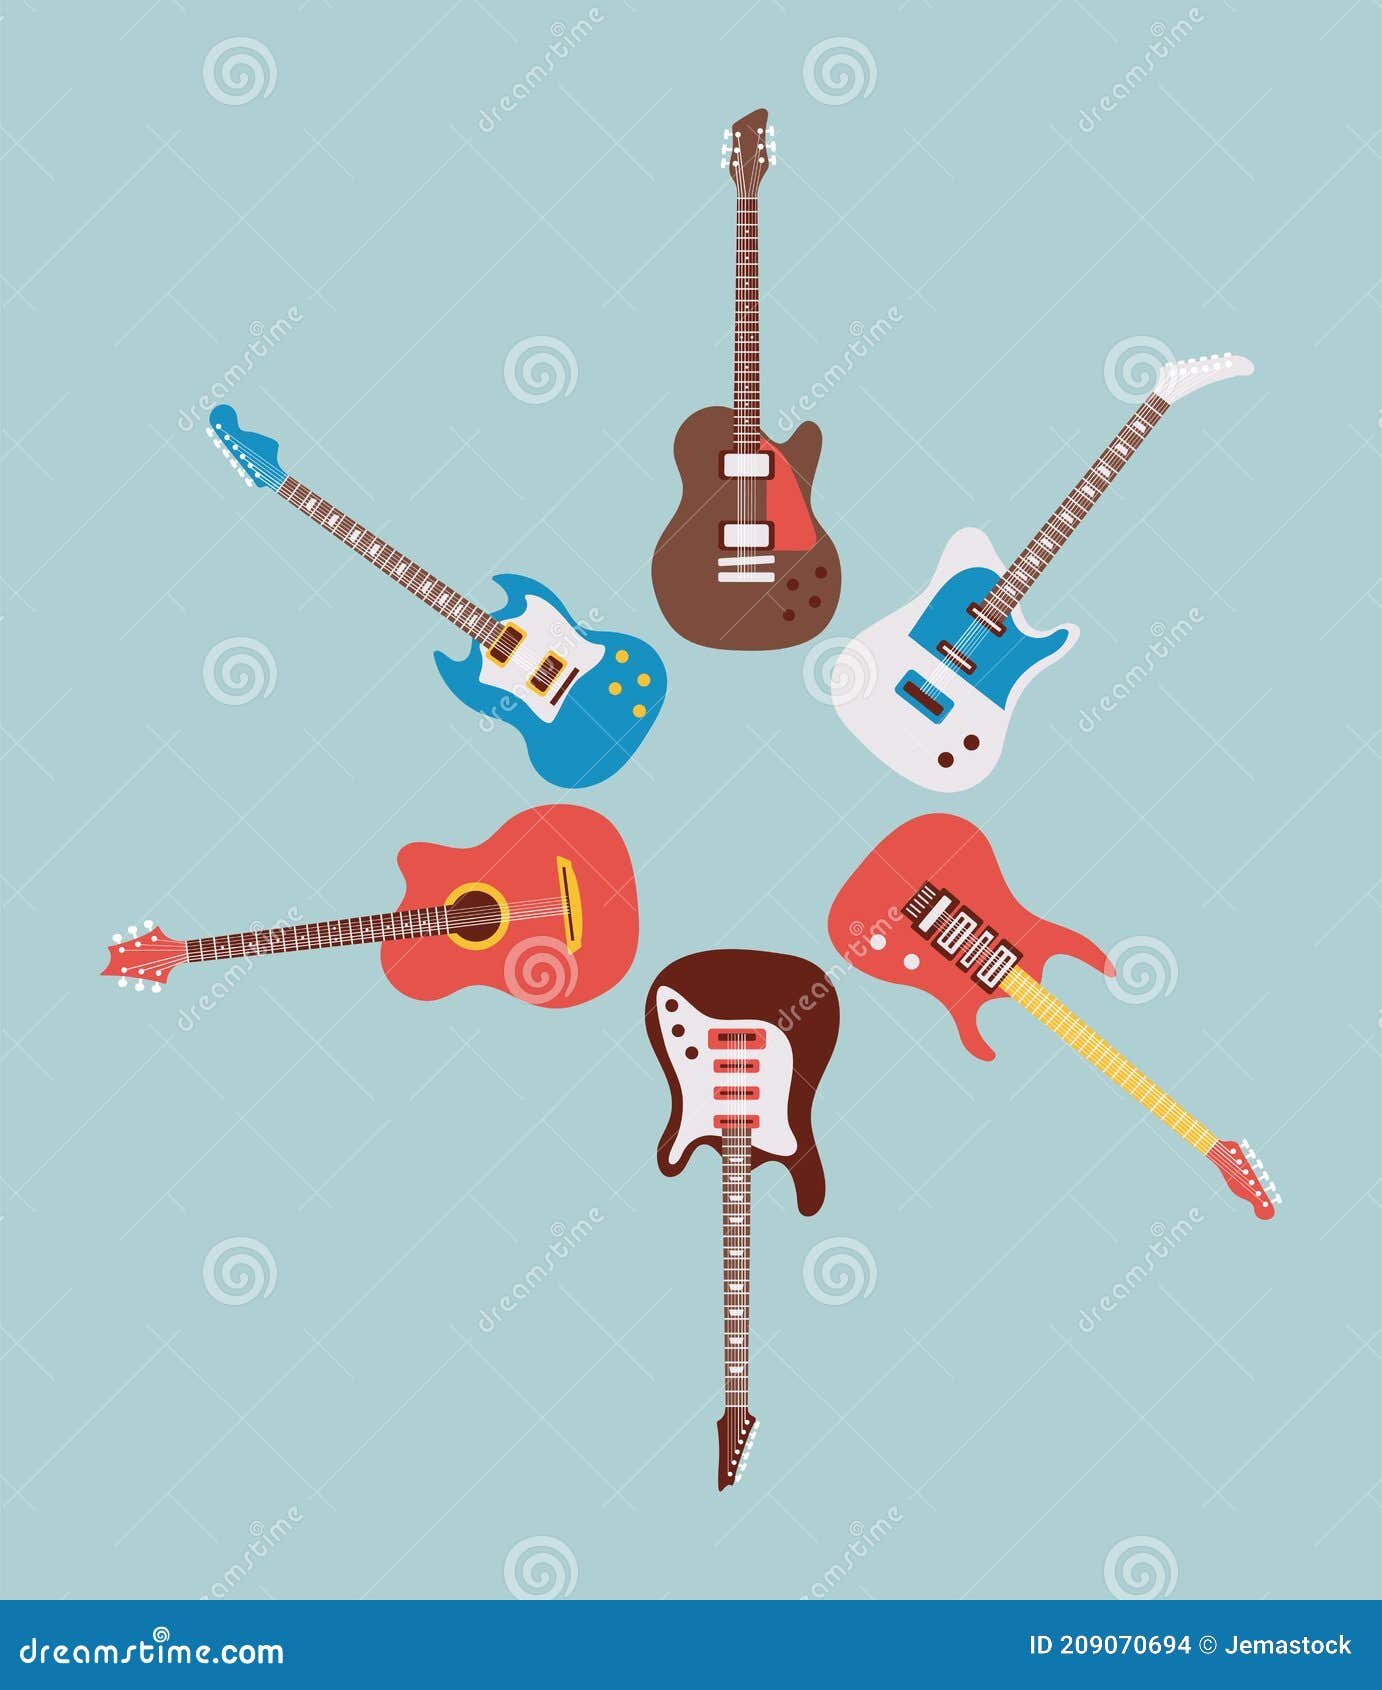 six guitars instruments musicals set icons around